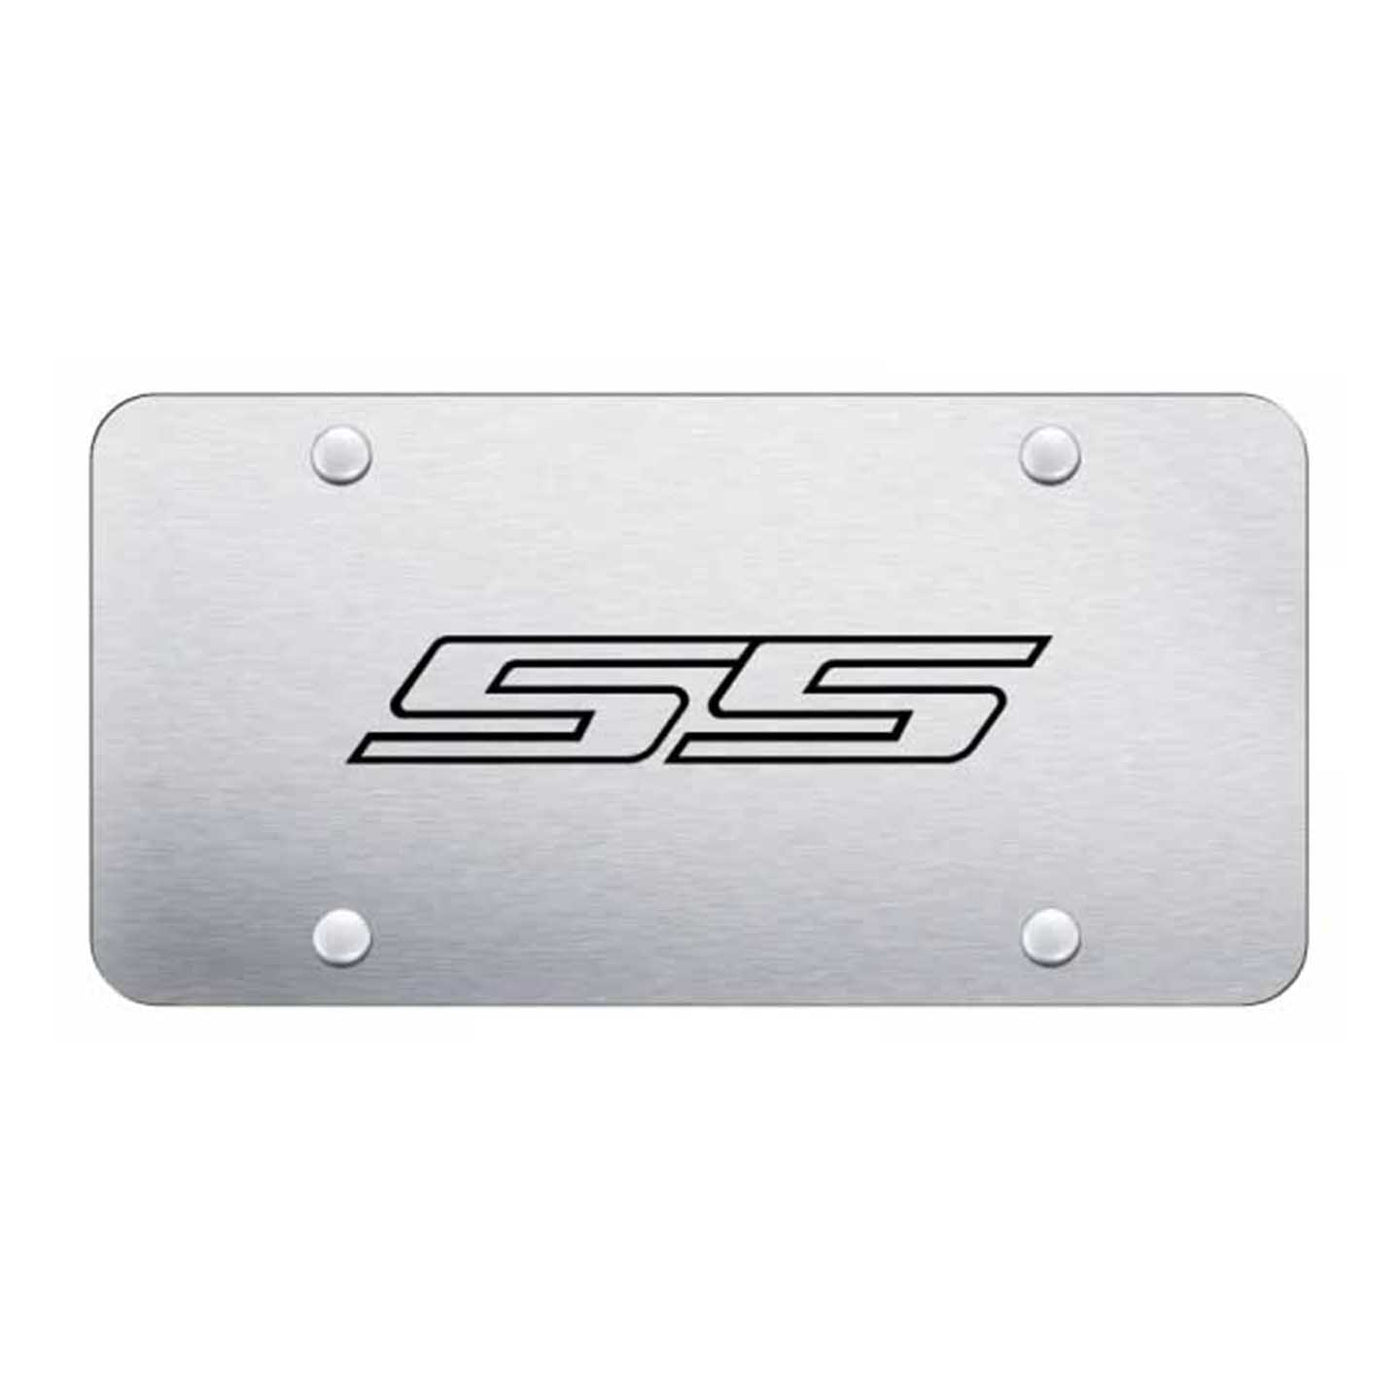 SS License Plate - Laser Etched Brushed